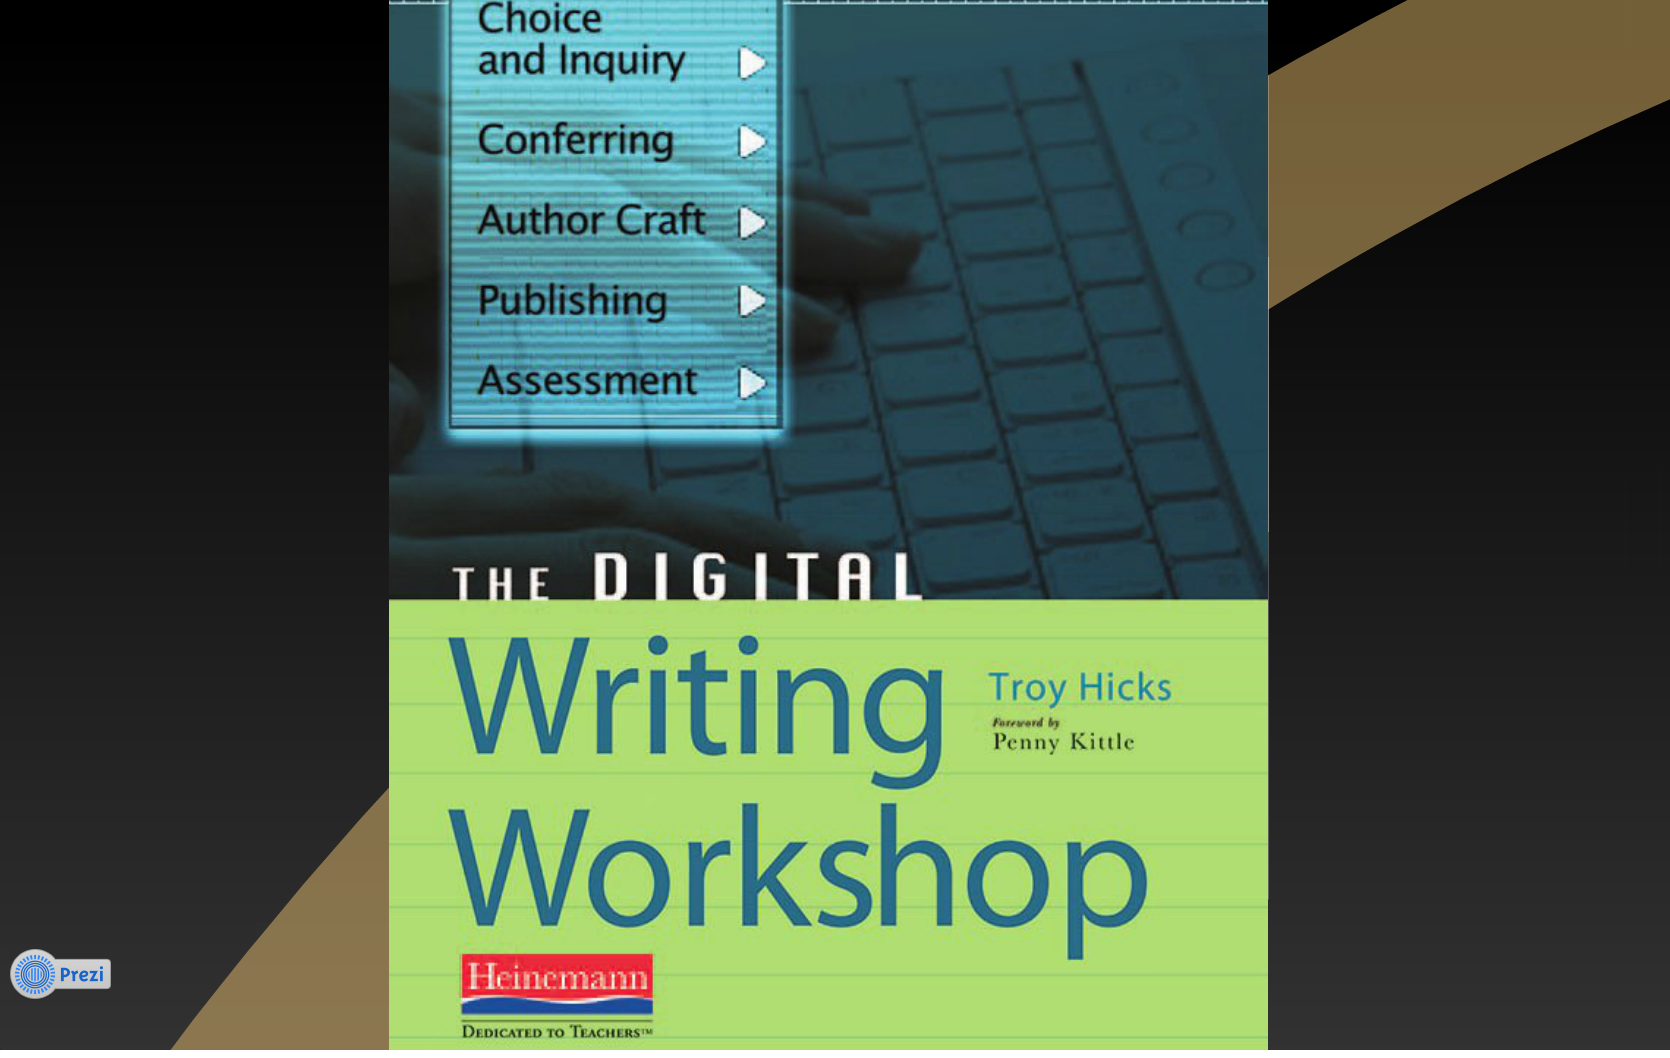 Reflections on Creating "The Digital Writing Workshop" on Prezi